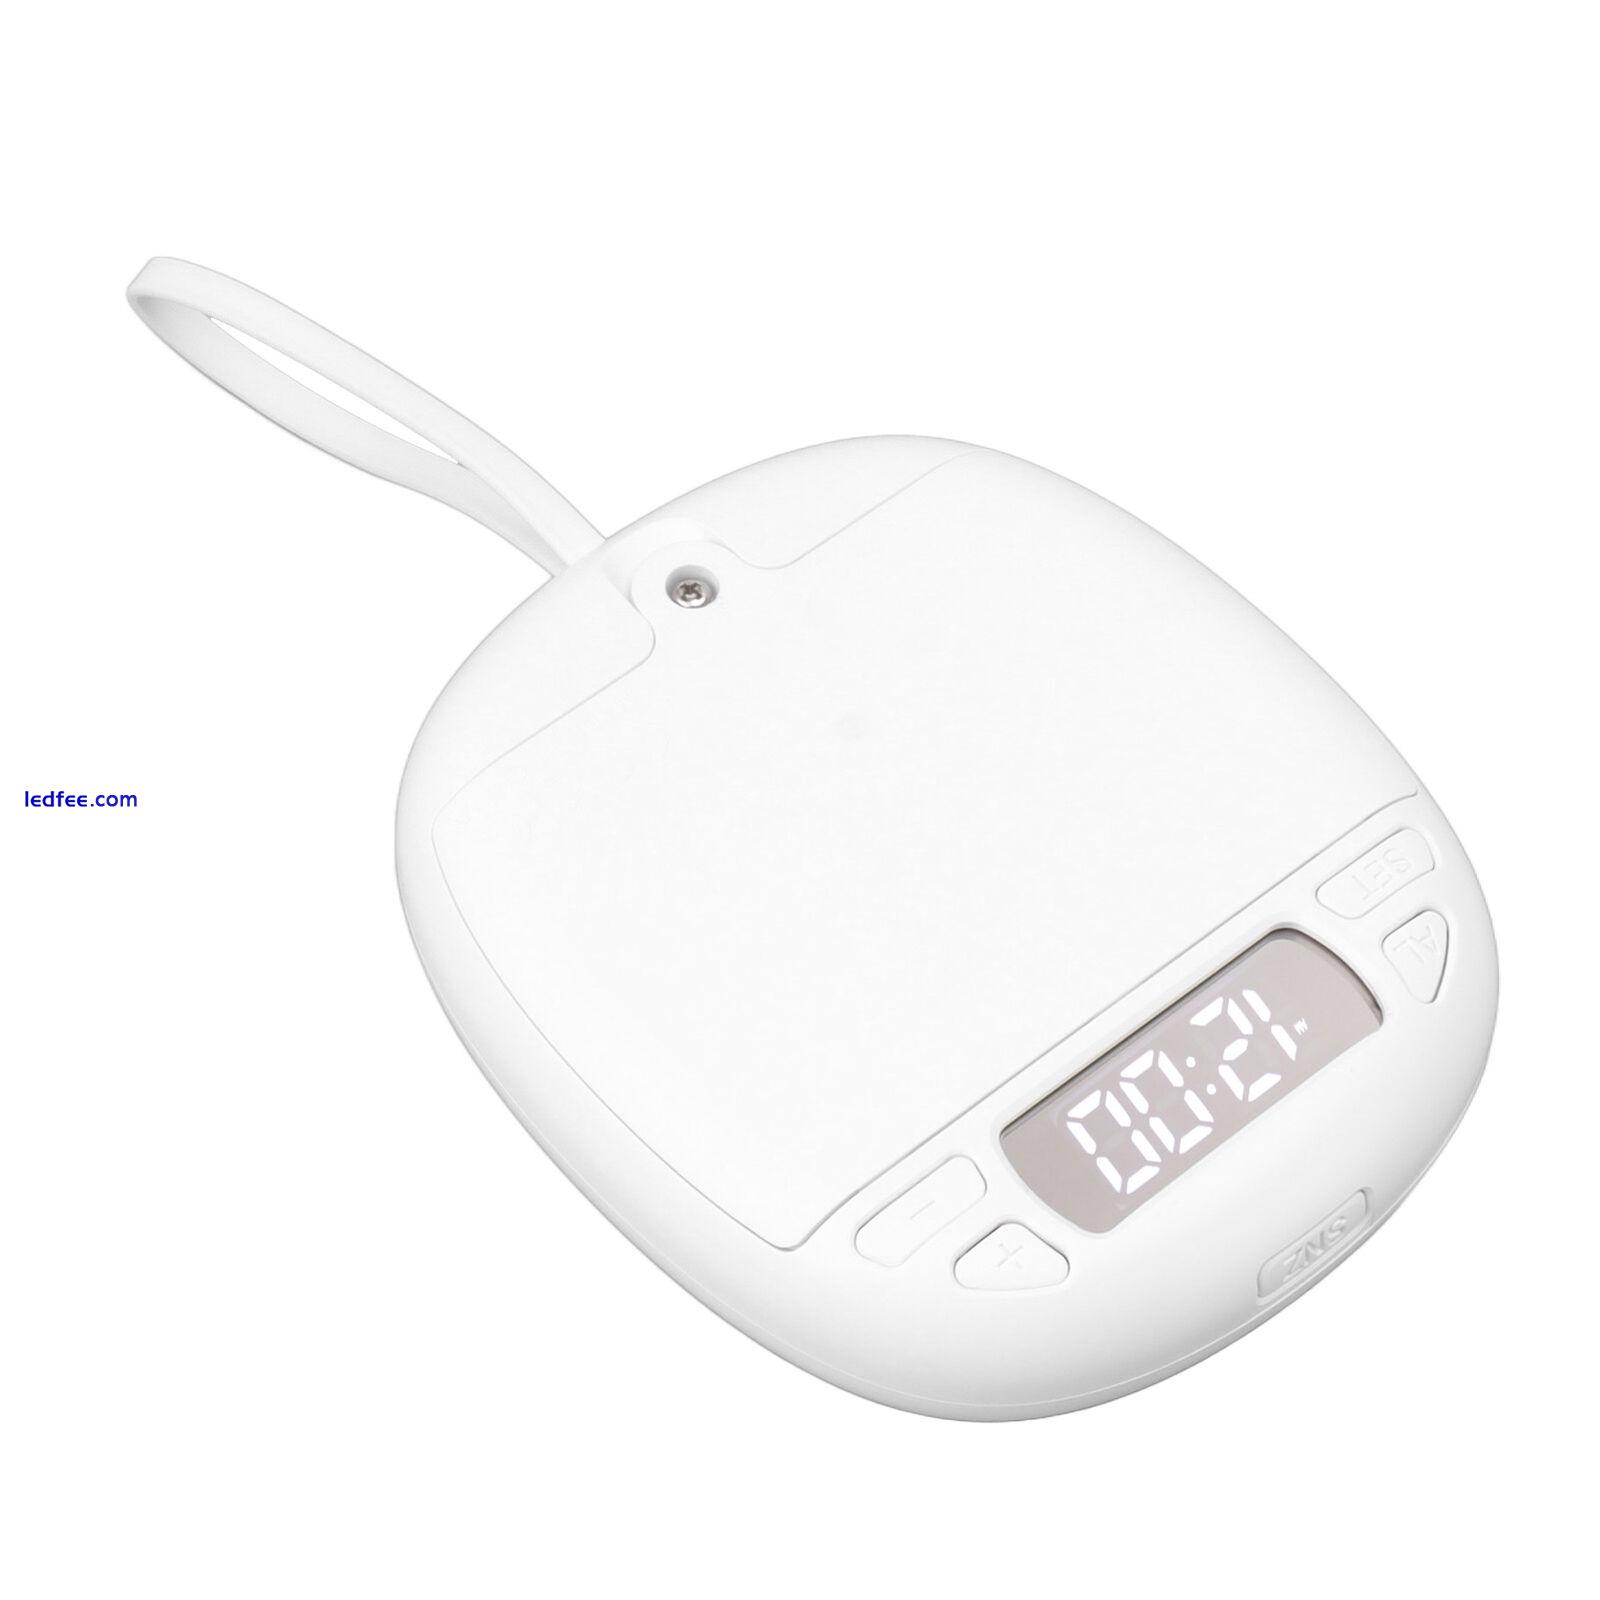 Vibrating Alarm Clock Adjustable 3 Levels Of Vibration LED Display Digital Cl DG 2 